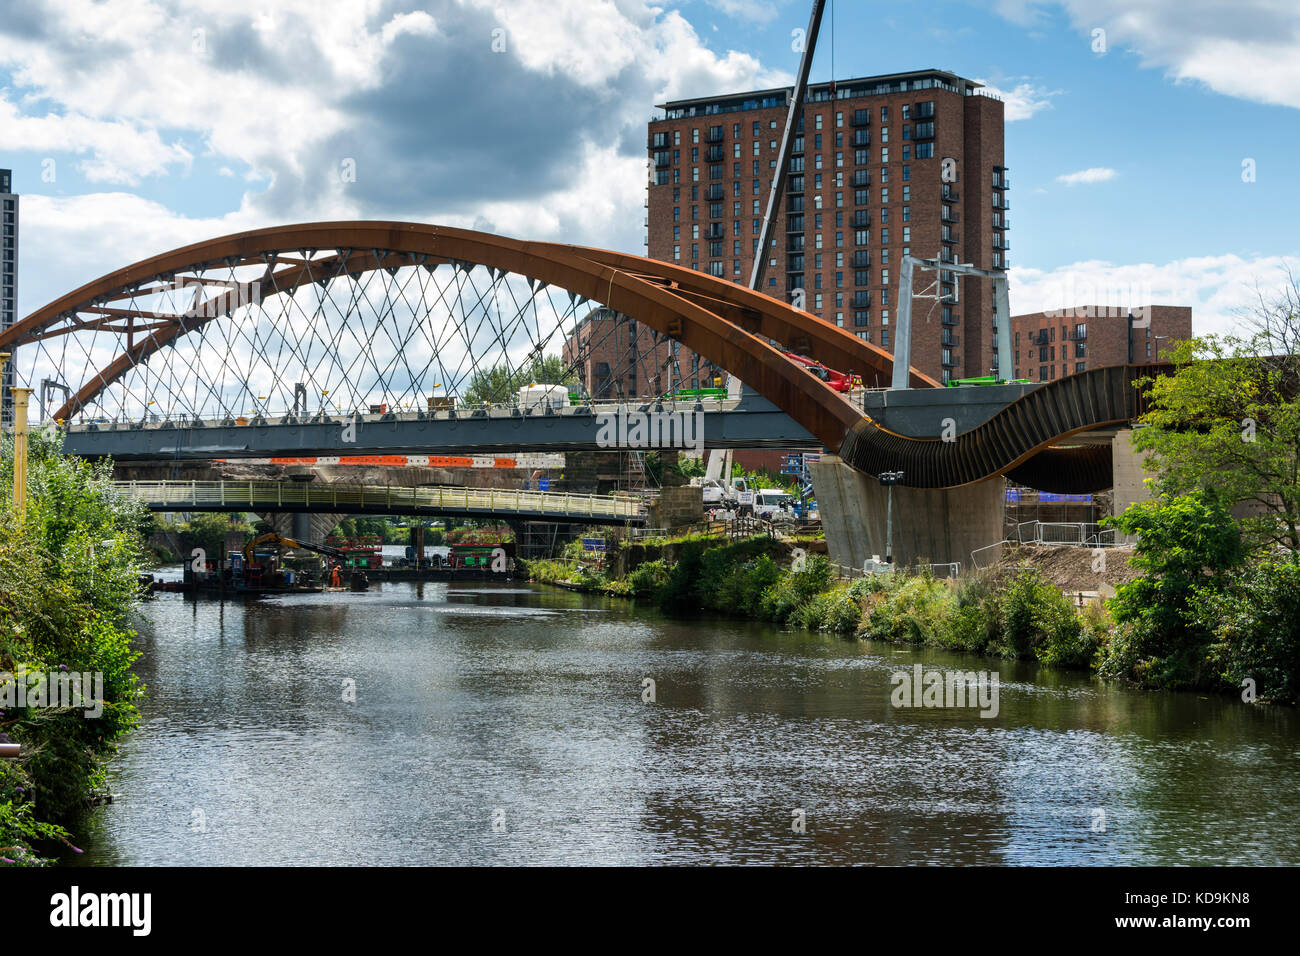 Neue Eisenbahnbrücke im Bau über dem Fluß Irwell, für Bahnprojekt Verknüpfung Ordsall Akkord Salford, Manchester, England, UK Stockfoto